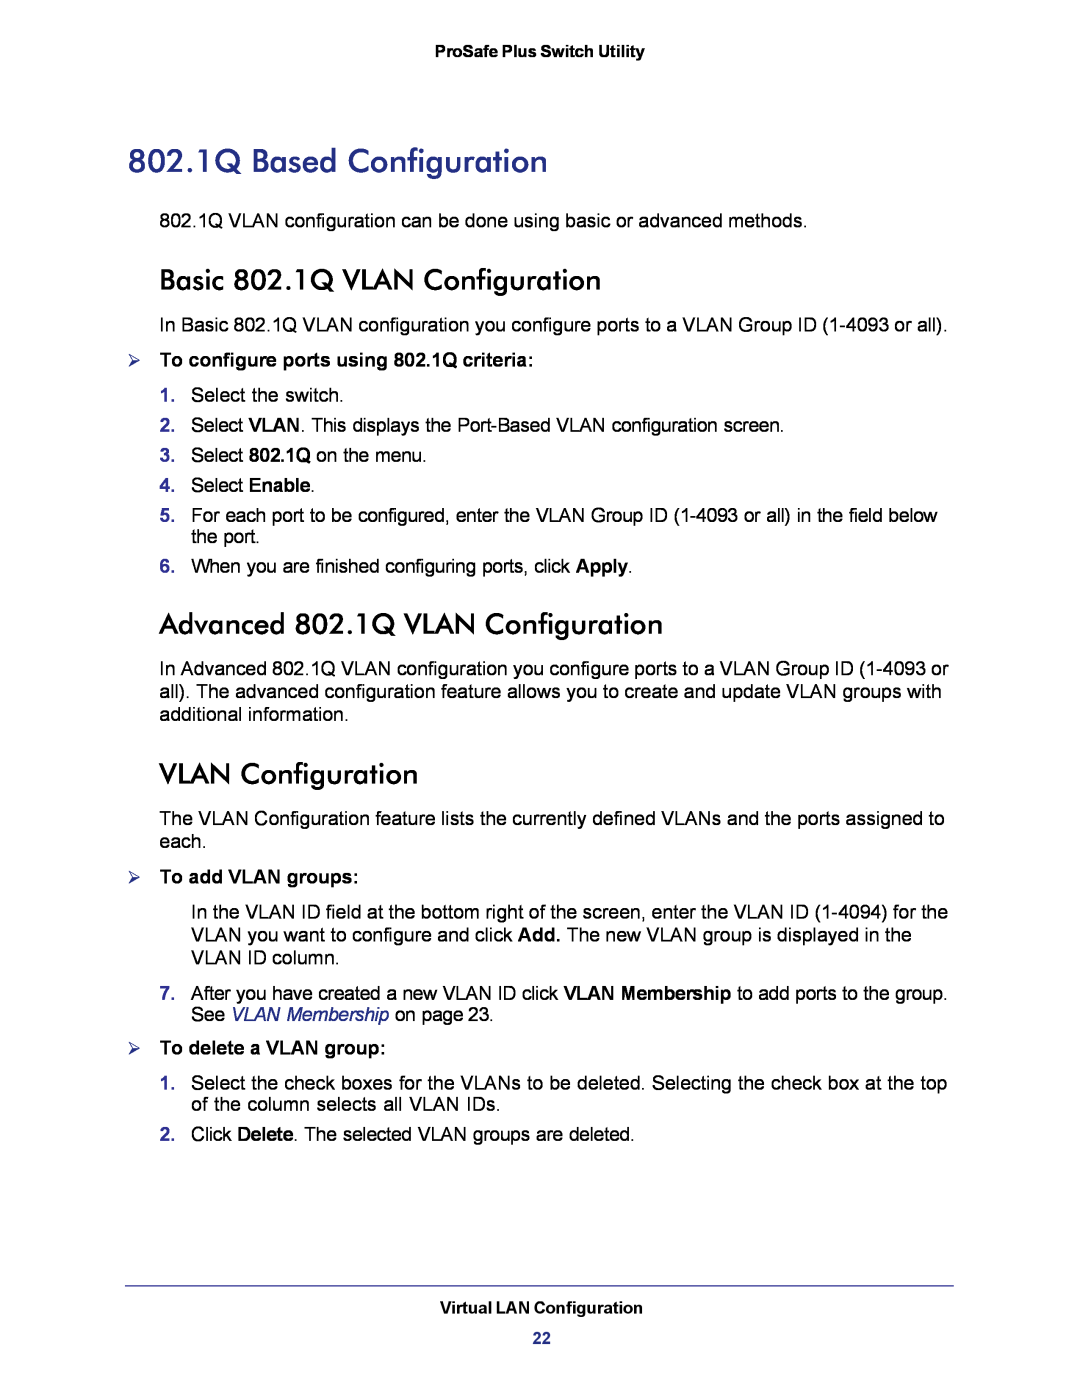 NETGEAR JGS524E-100NAS 802.1Q Based Configuration, Basic 802.1Q VLAN Configuration, Advanced 802.1Q VLAN Configuration 